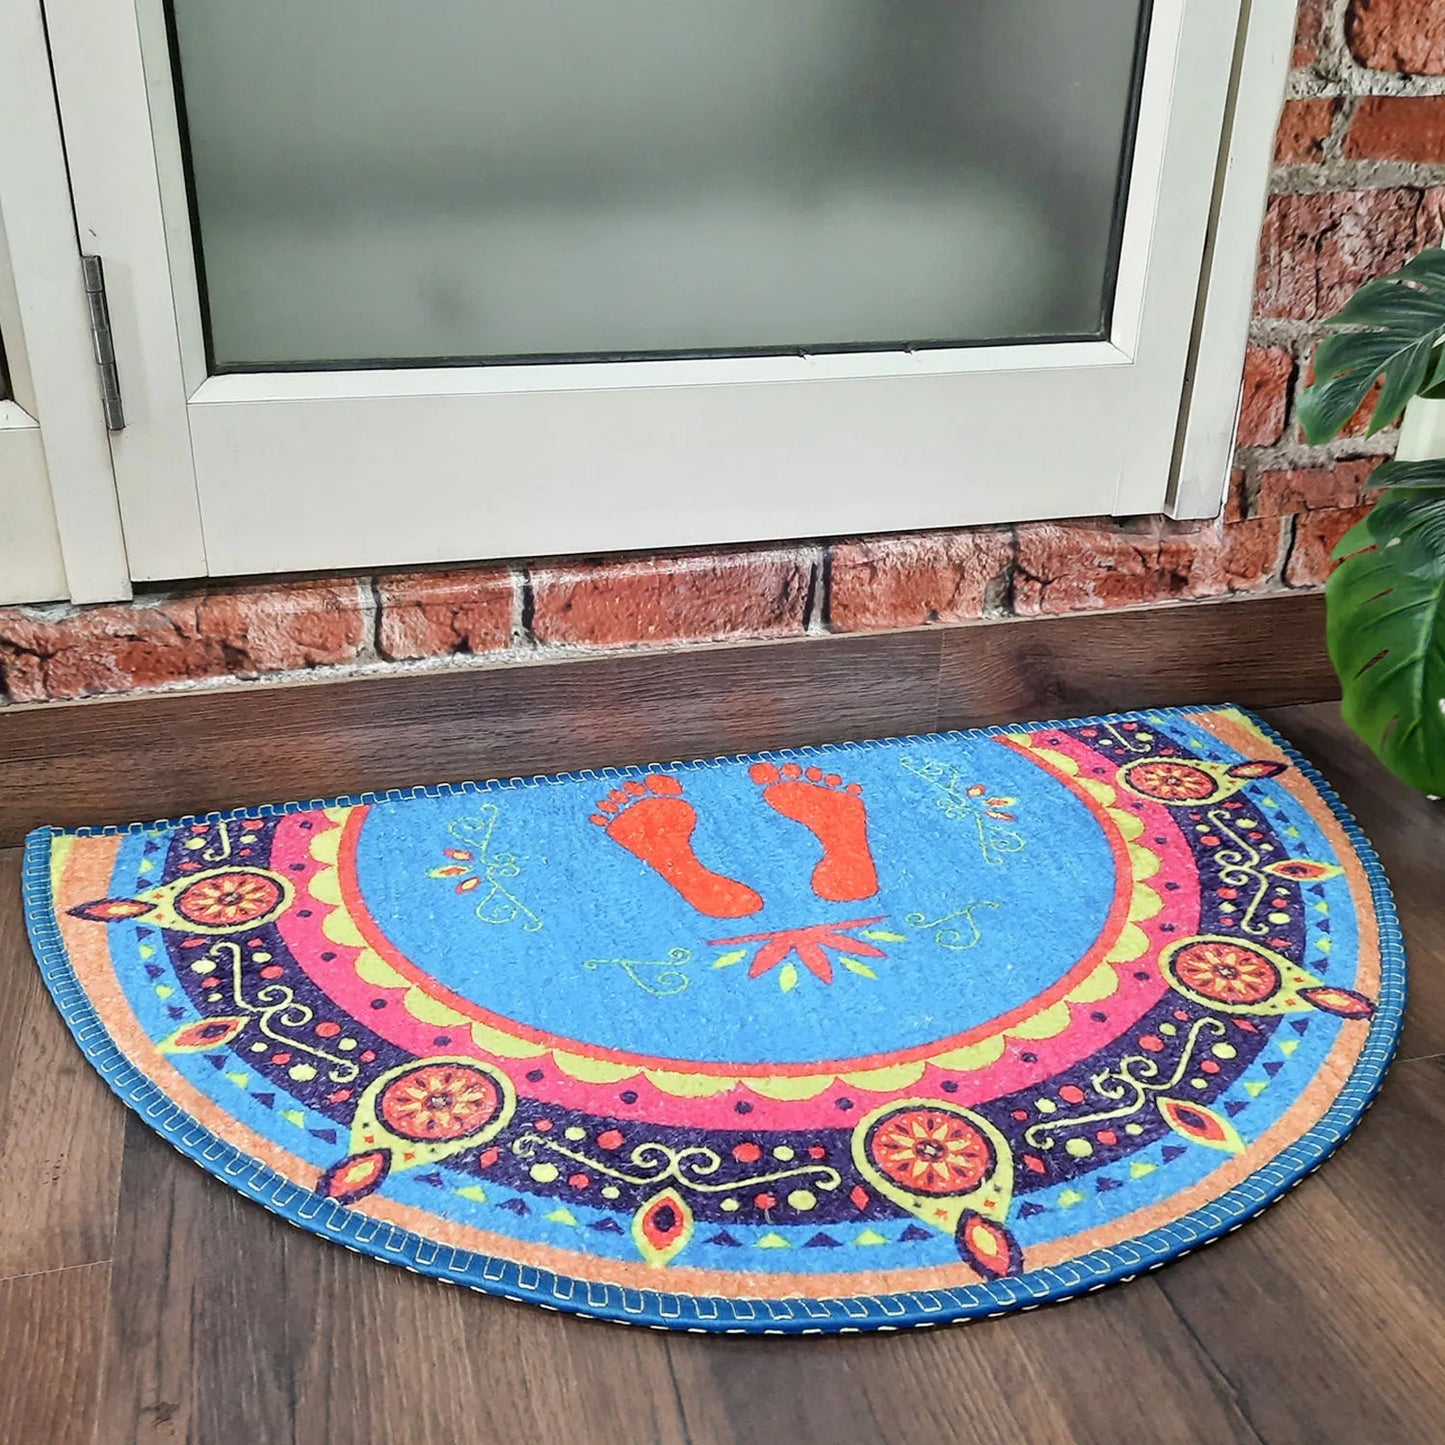 Avioni Home Floor Mats in Beautiful Traditional Lakshmi Padma (Feet) Design – Anti Slip, Durable & Washable | Outdoor & Indoor